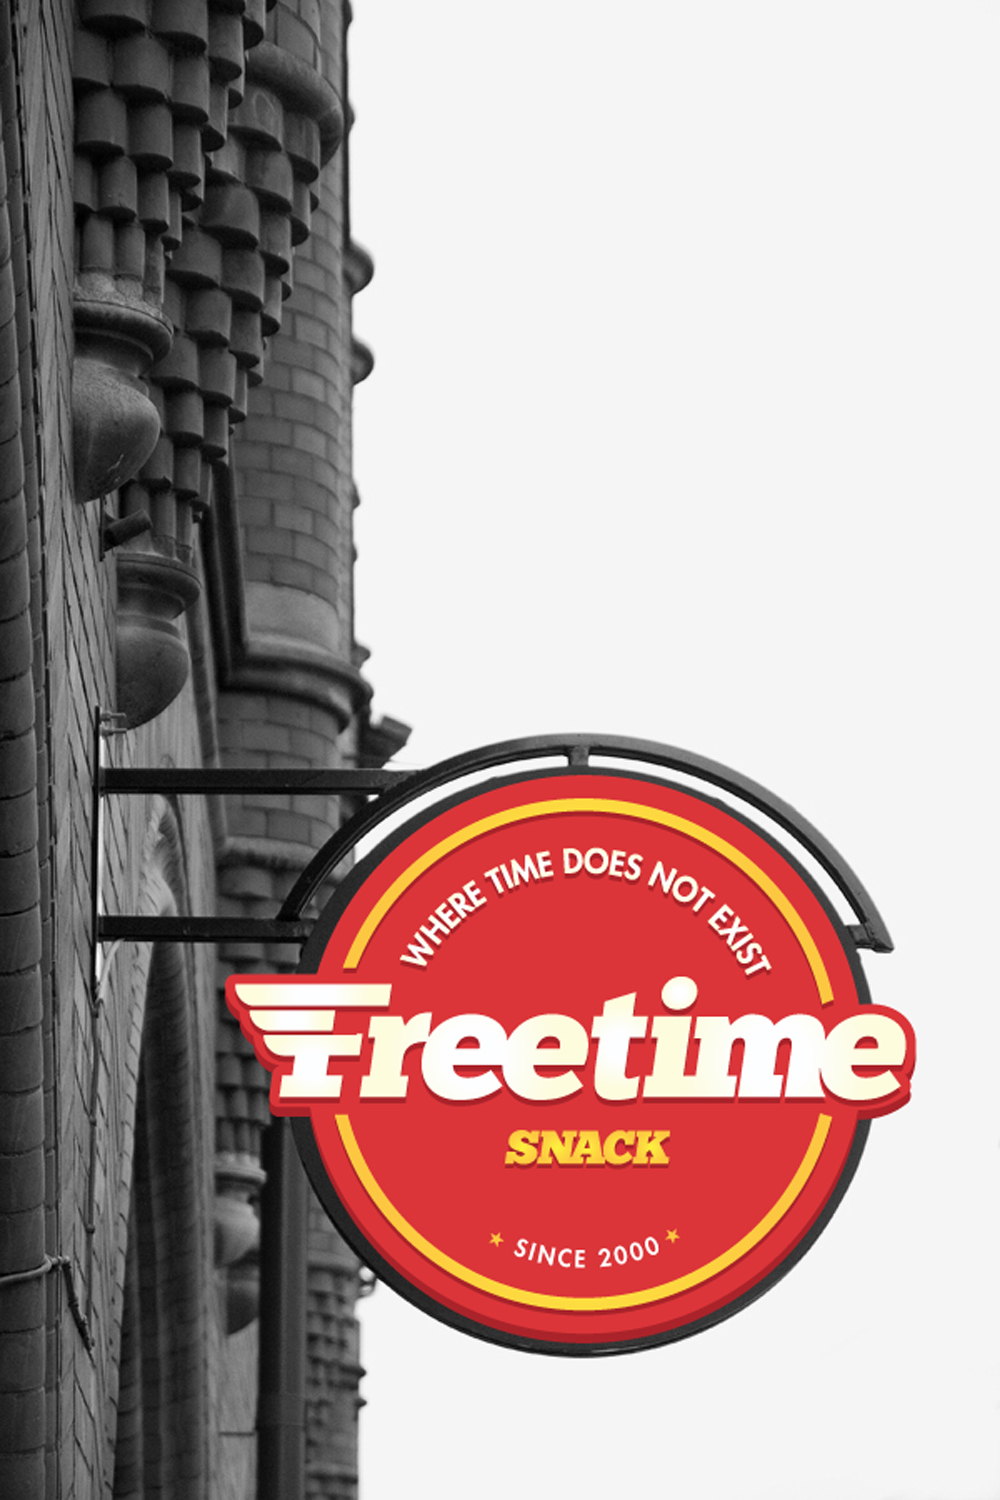 Freetime snack time Food  restaurant